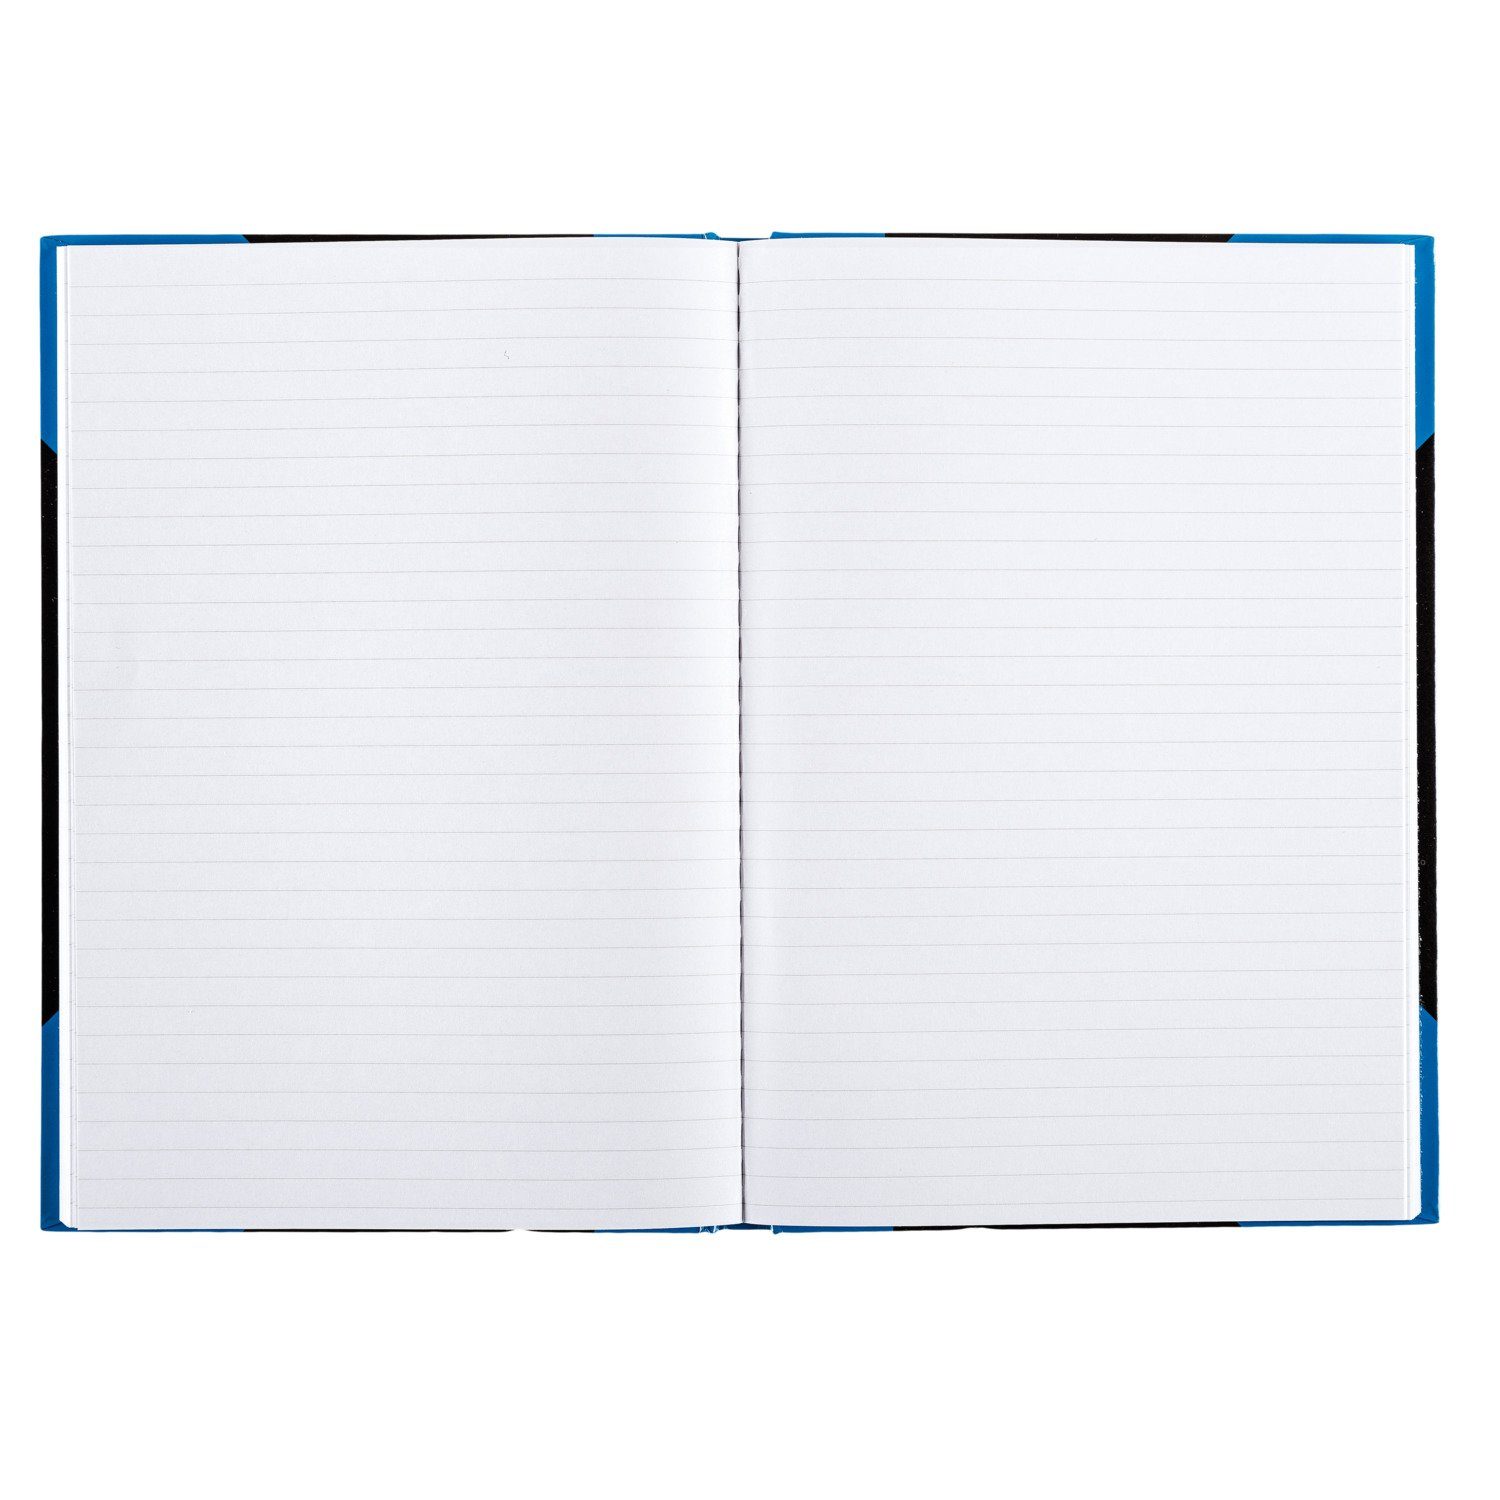 Idena Notizbuch Idena 10094 70 Kladde - DIN A6, Einban 96 fester g/m², liniert, Blatt